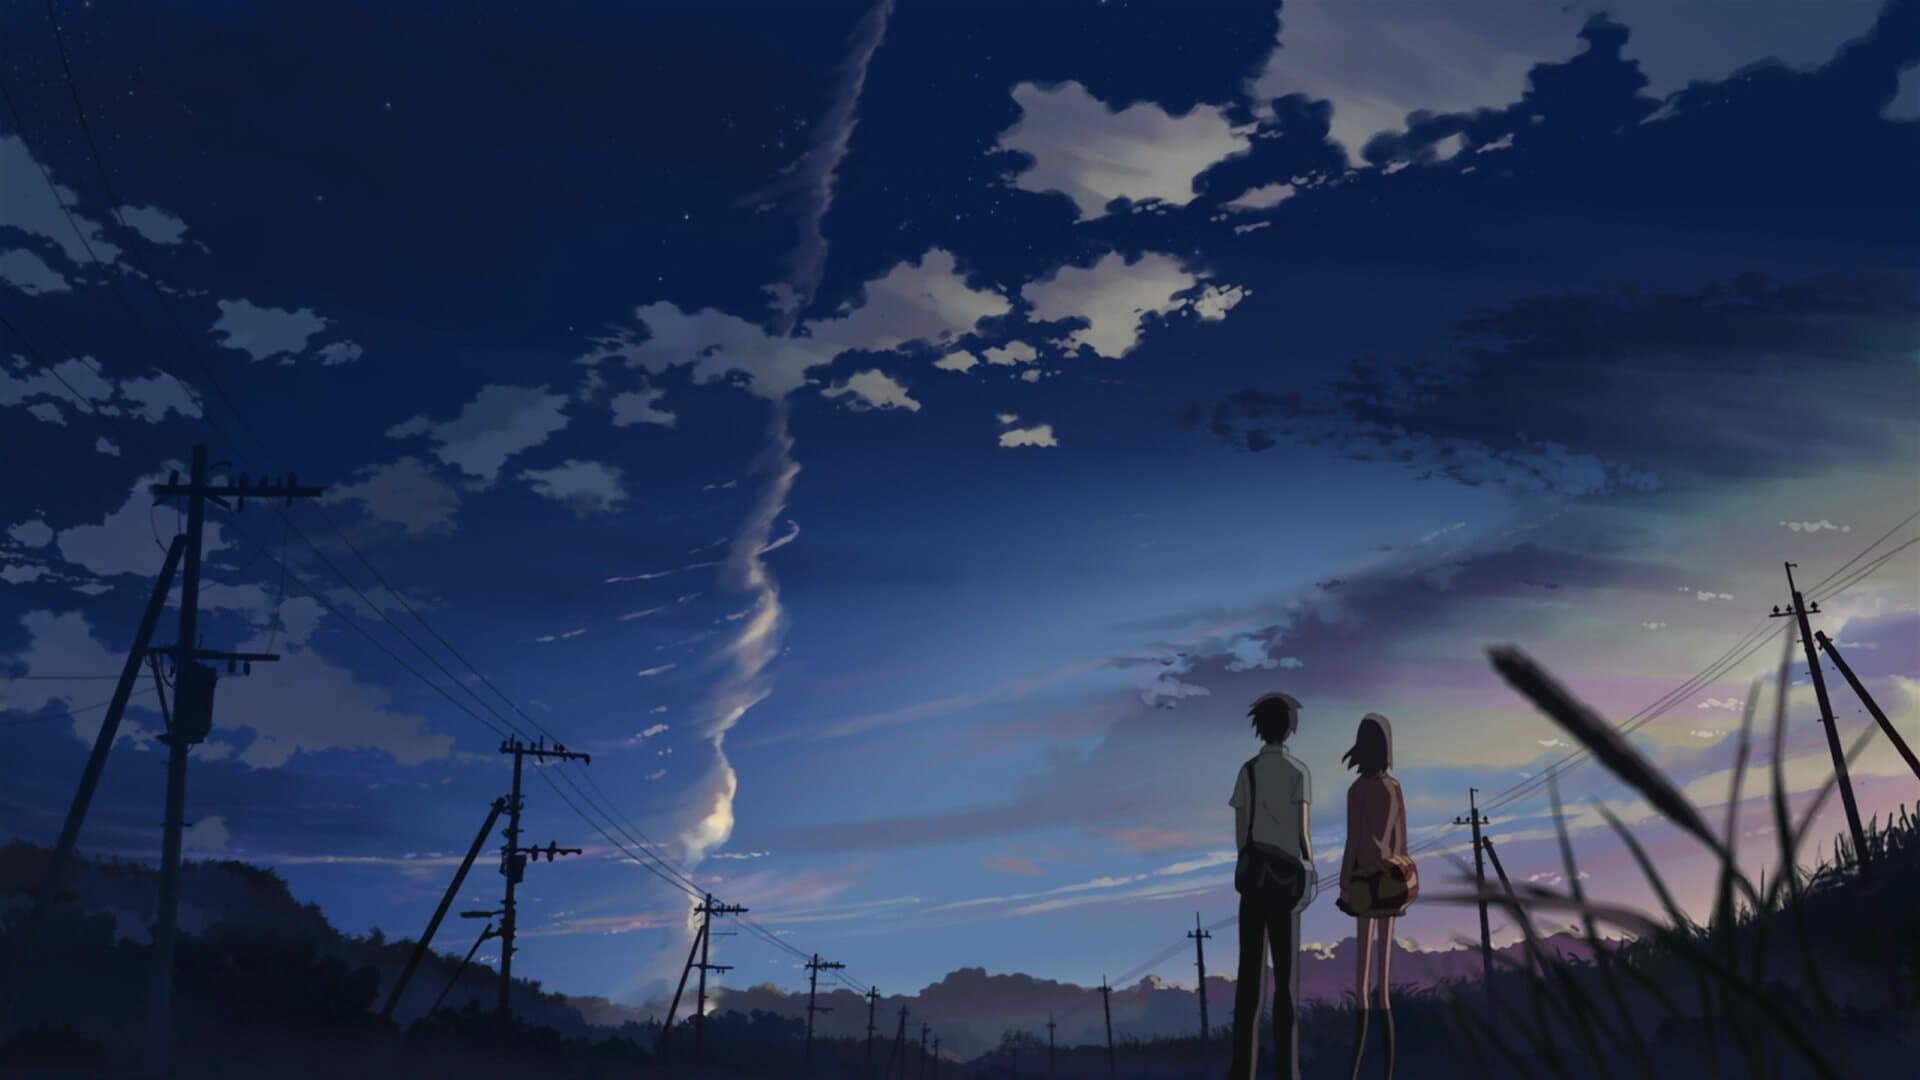 Sad Romantic Anime Wallpapers